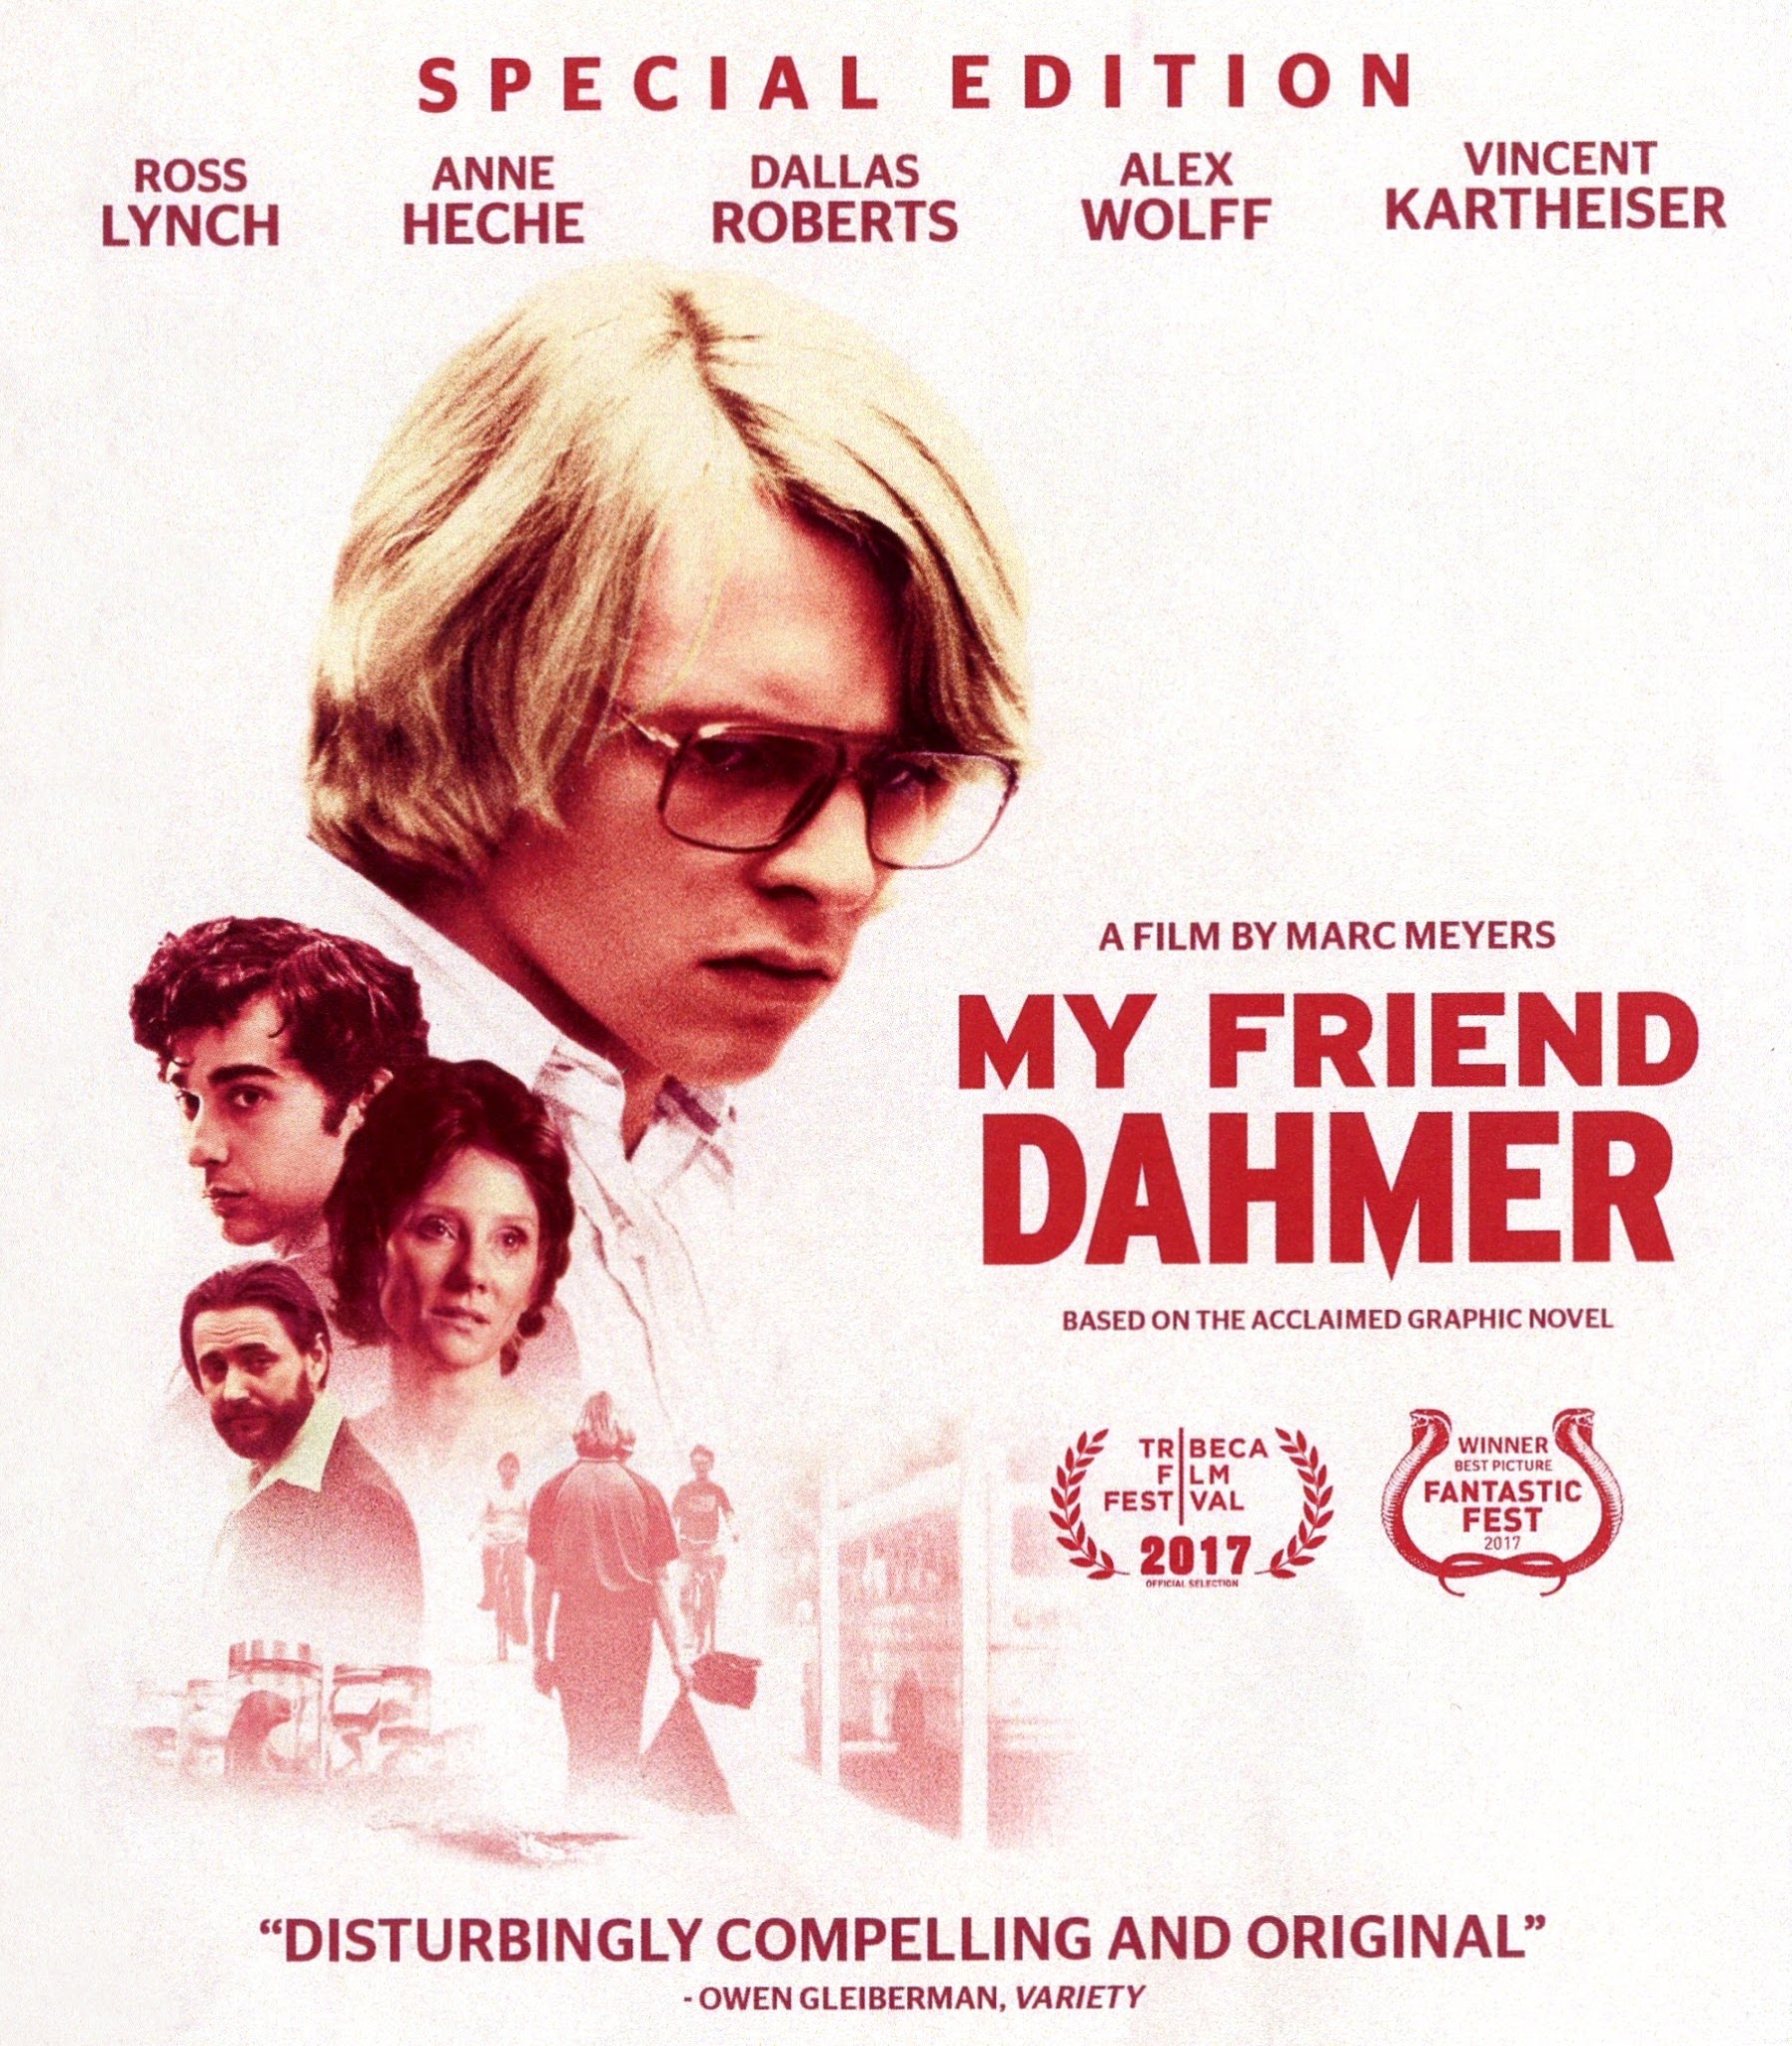 My Friend Dahmer poster-áá¡ á¡á£á áááá¡ á¨ááááá